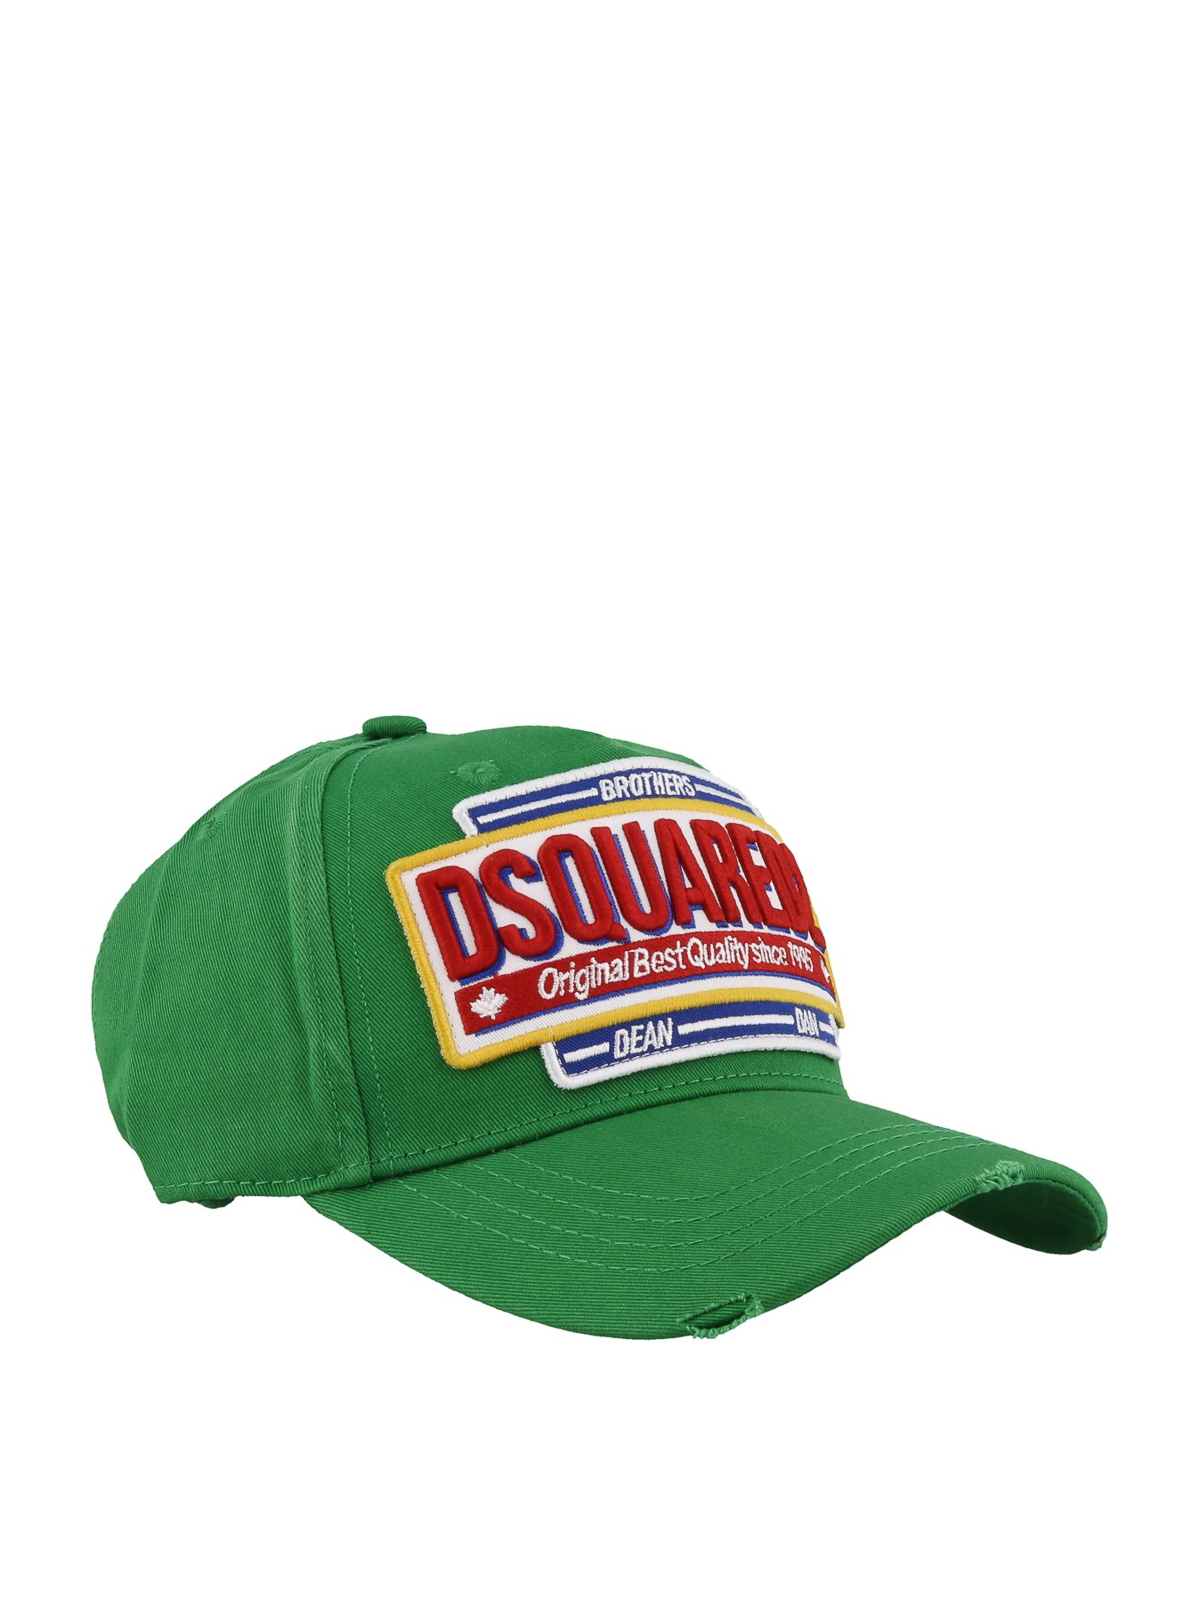 onhandig Verborgen Accumulatie Hats & caps Dsquared2 - Dean & Dan Brothers green baseball cap -  BCM020108C000018079